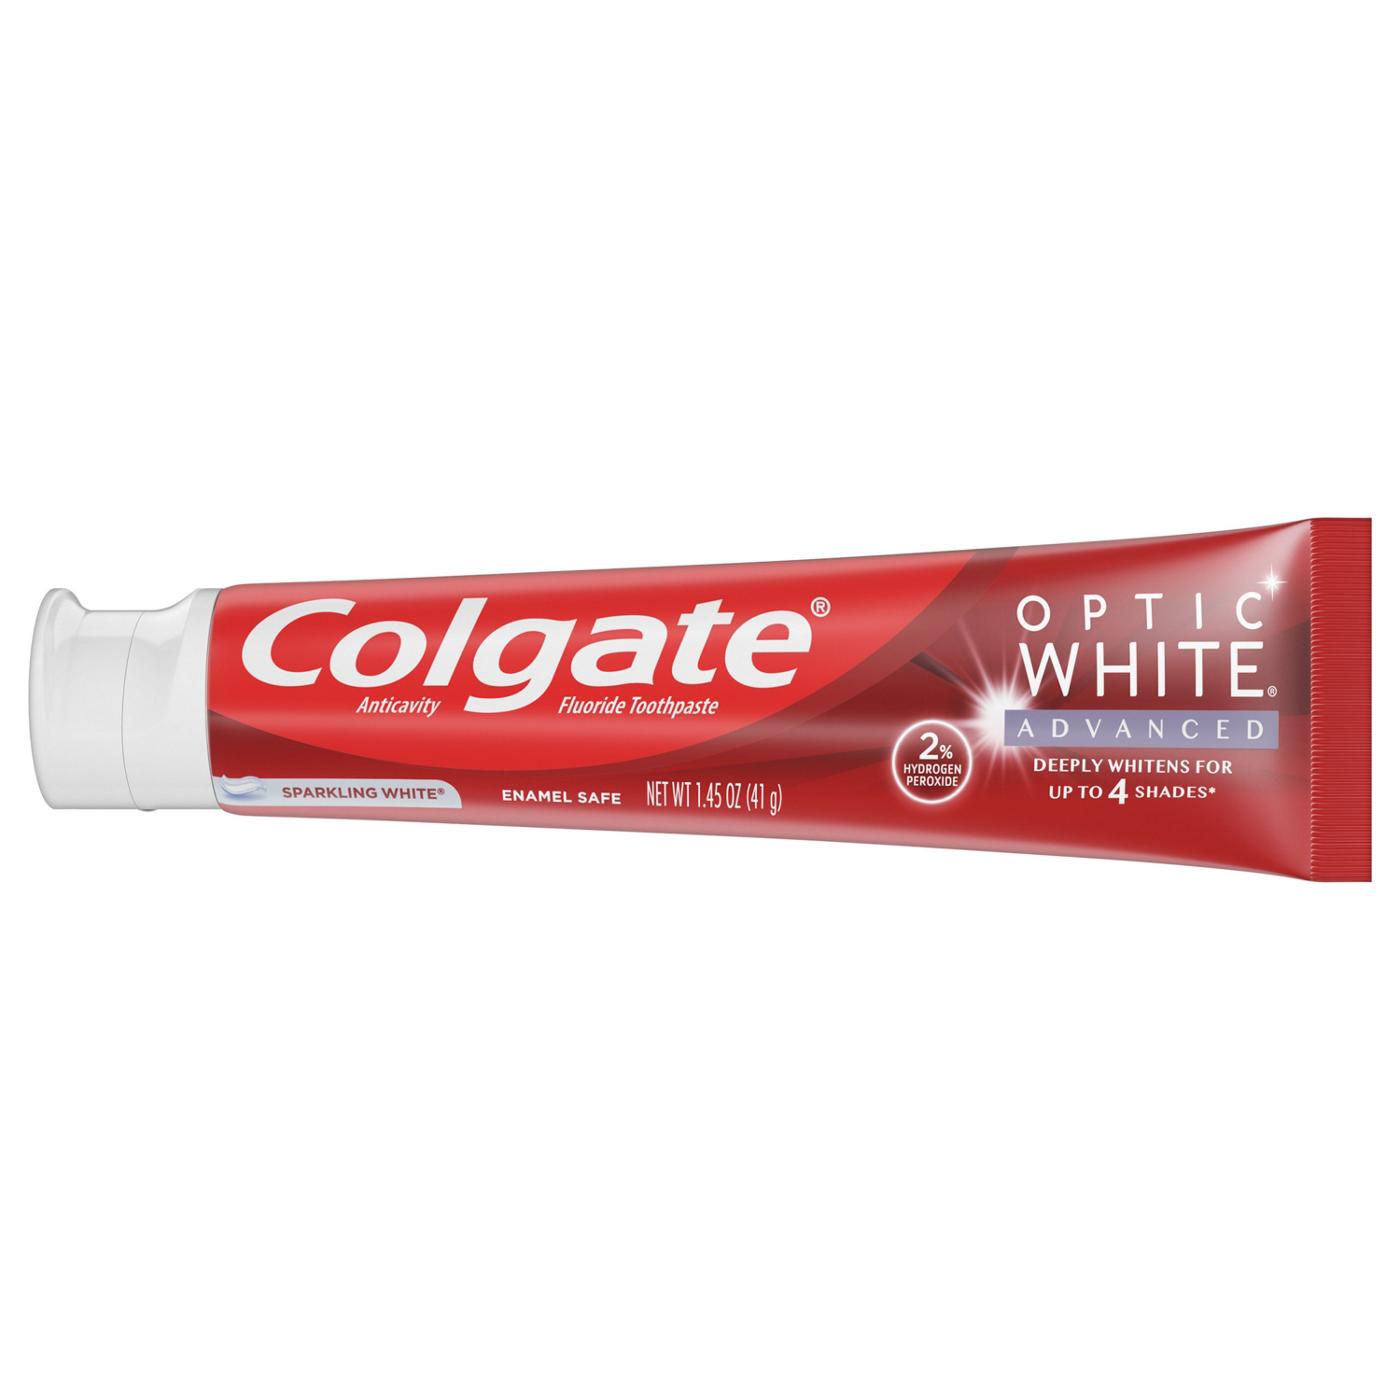 Colgate Optic White Advanced Anticavity Toothpaste - Sparkling White; image 9 of 10